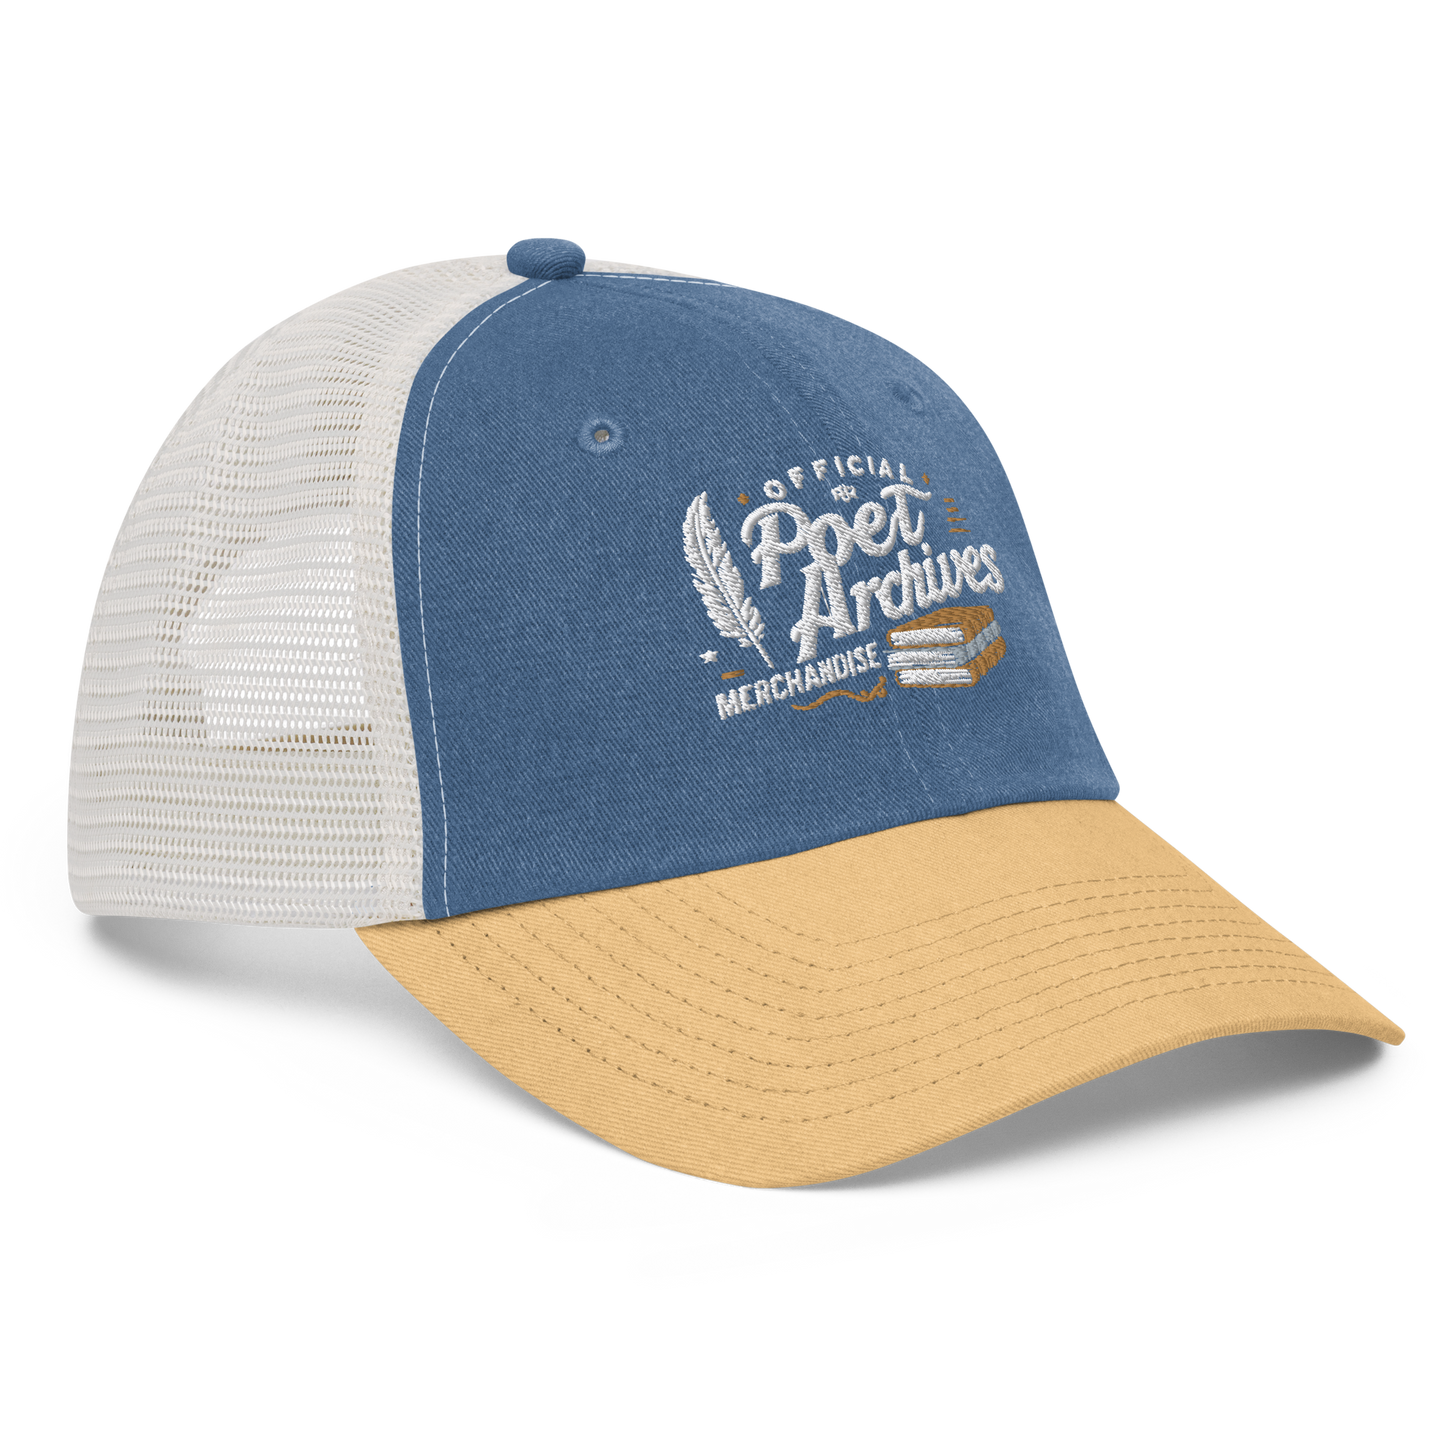 Official Merchandise Mesh cap